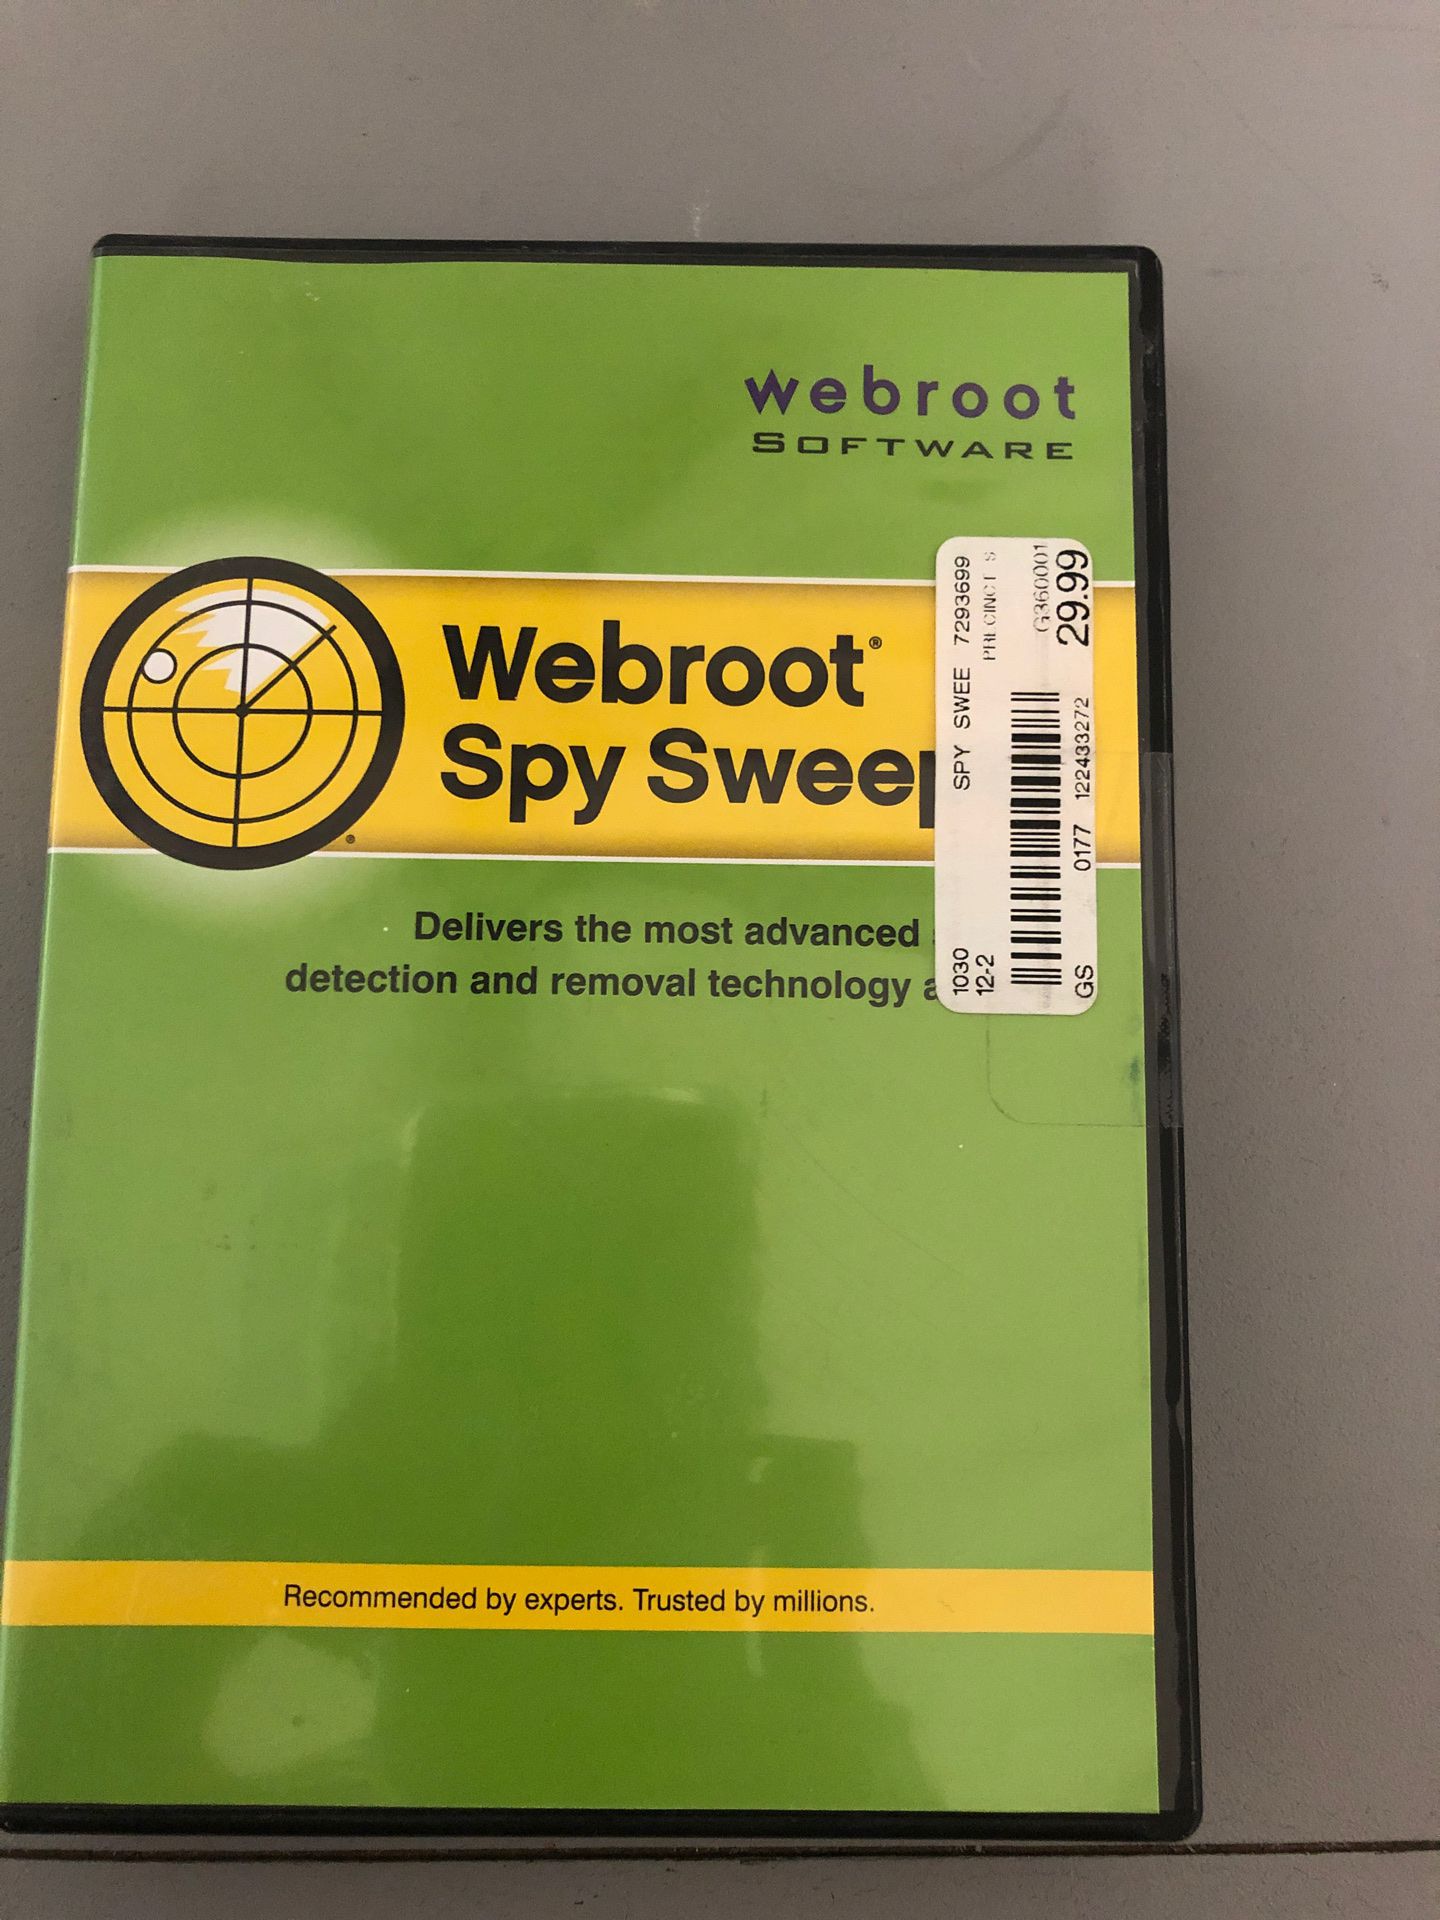 Webroot software